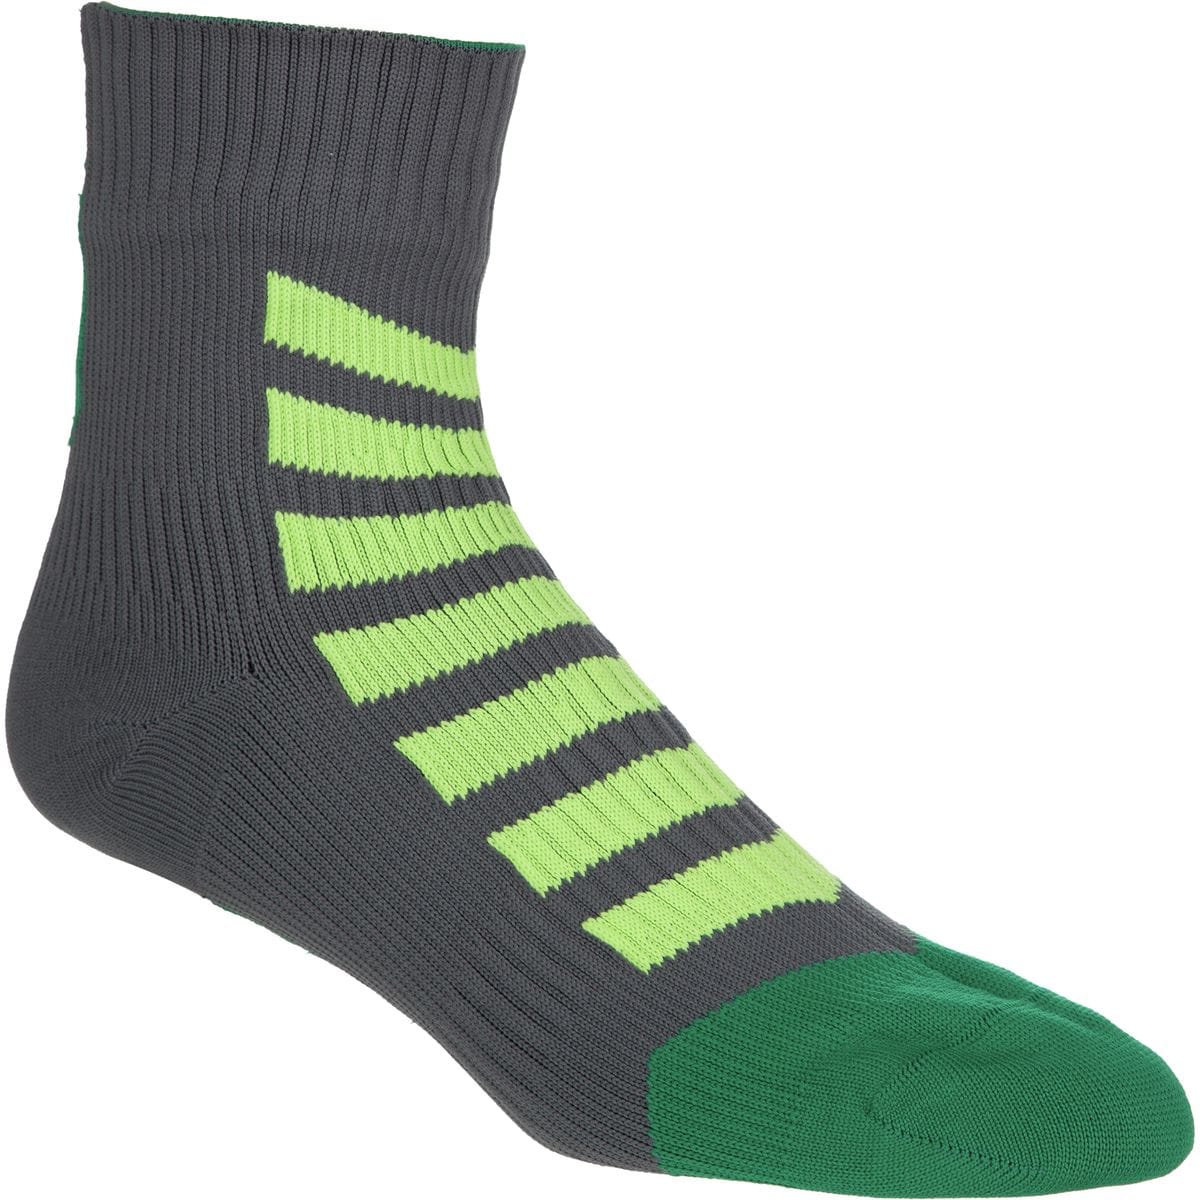 SealSkinz MTB Ankle Sock with Hydrostop - Men's